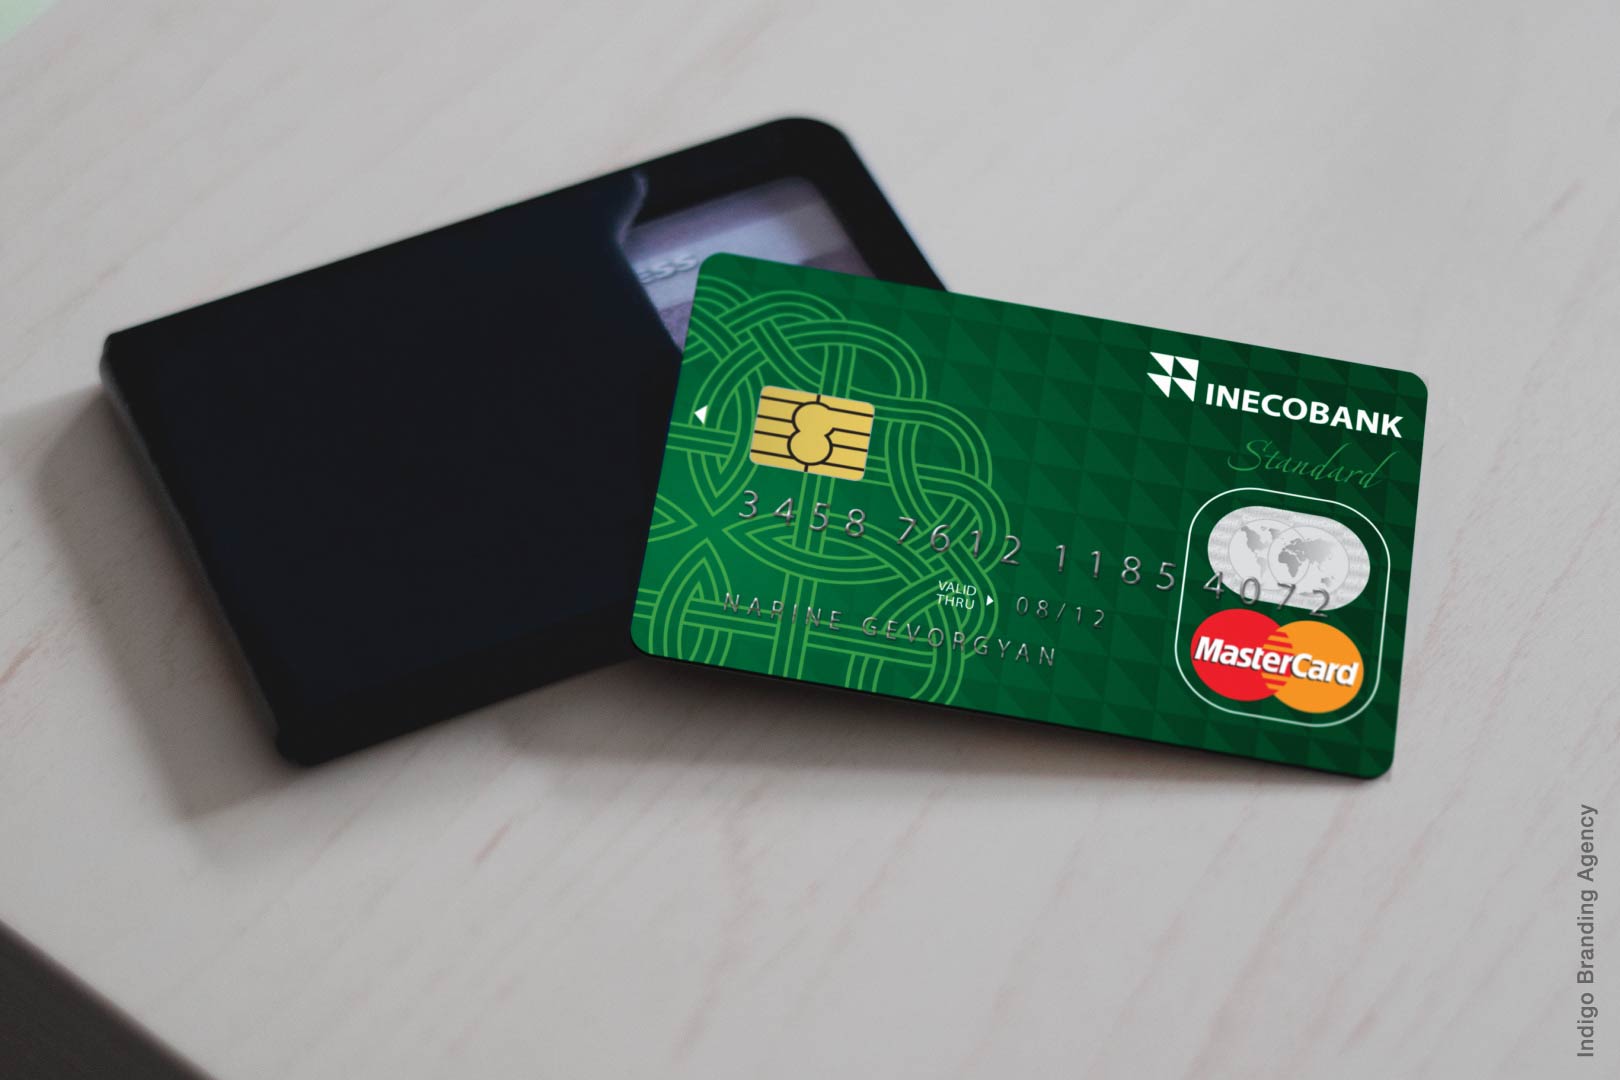 Inecobank card design by Indigo branding